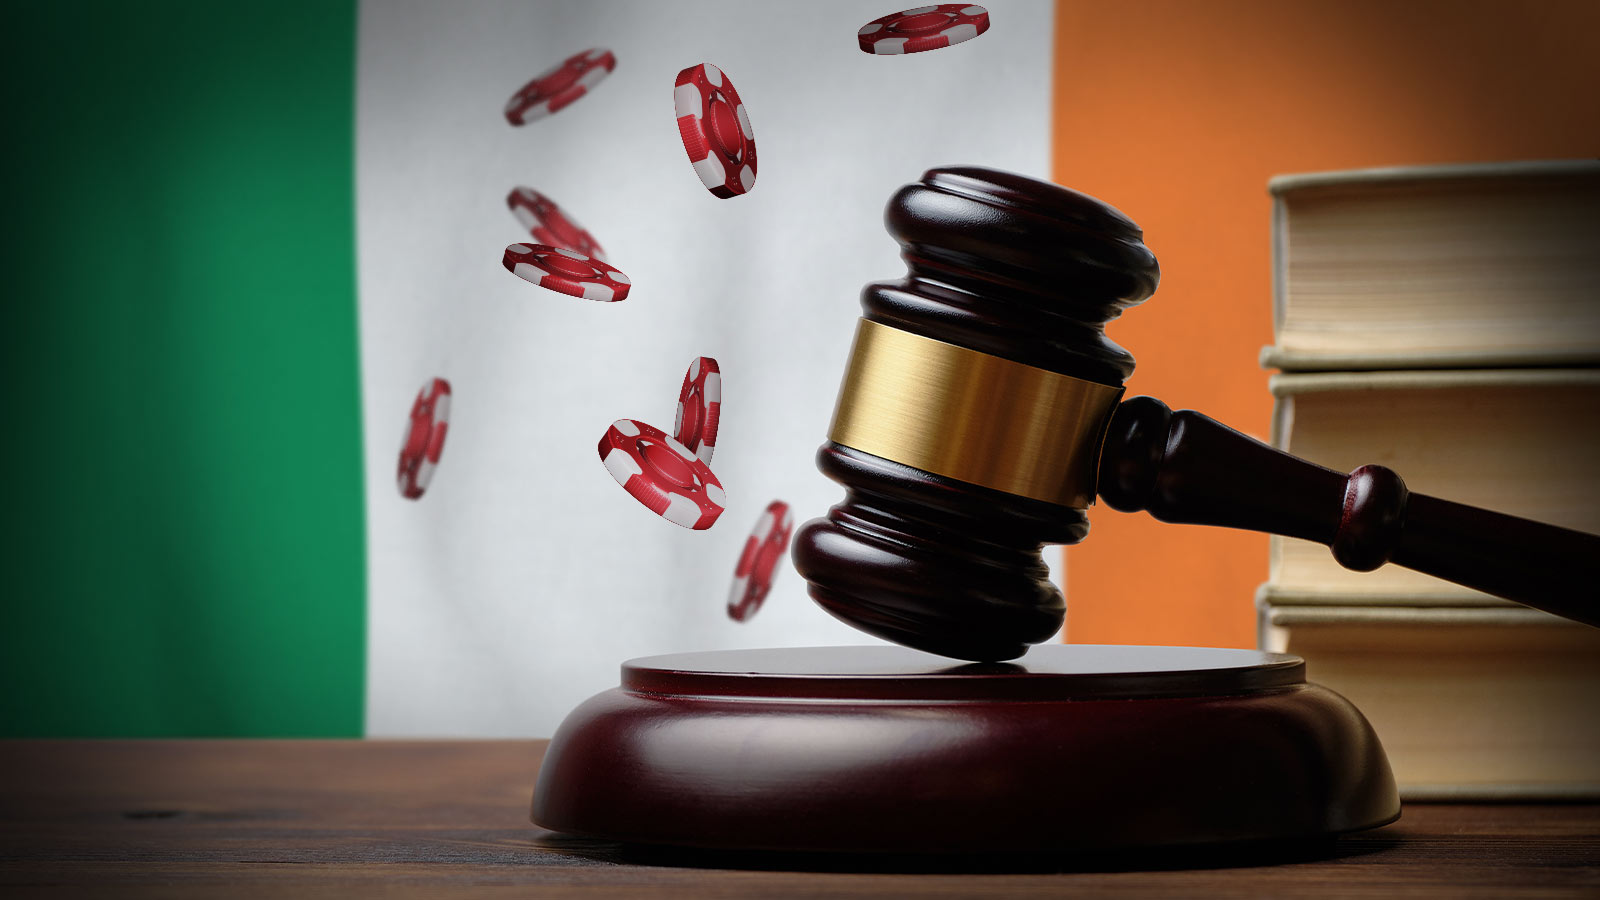 Future Irish Betting Regulation Bill Introduces Stricter Rules